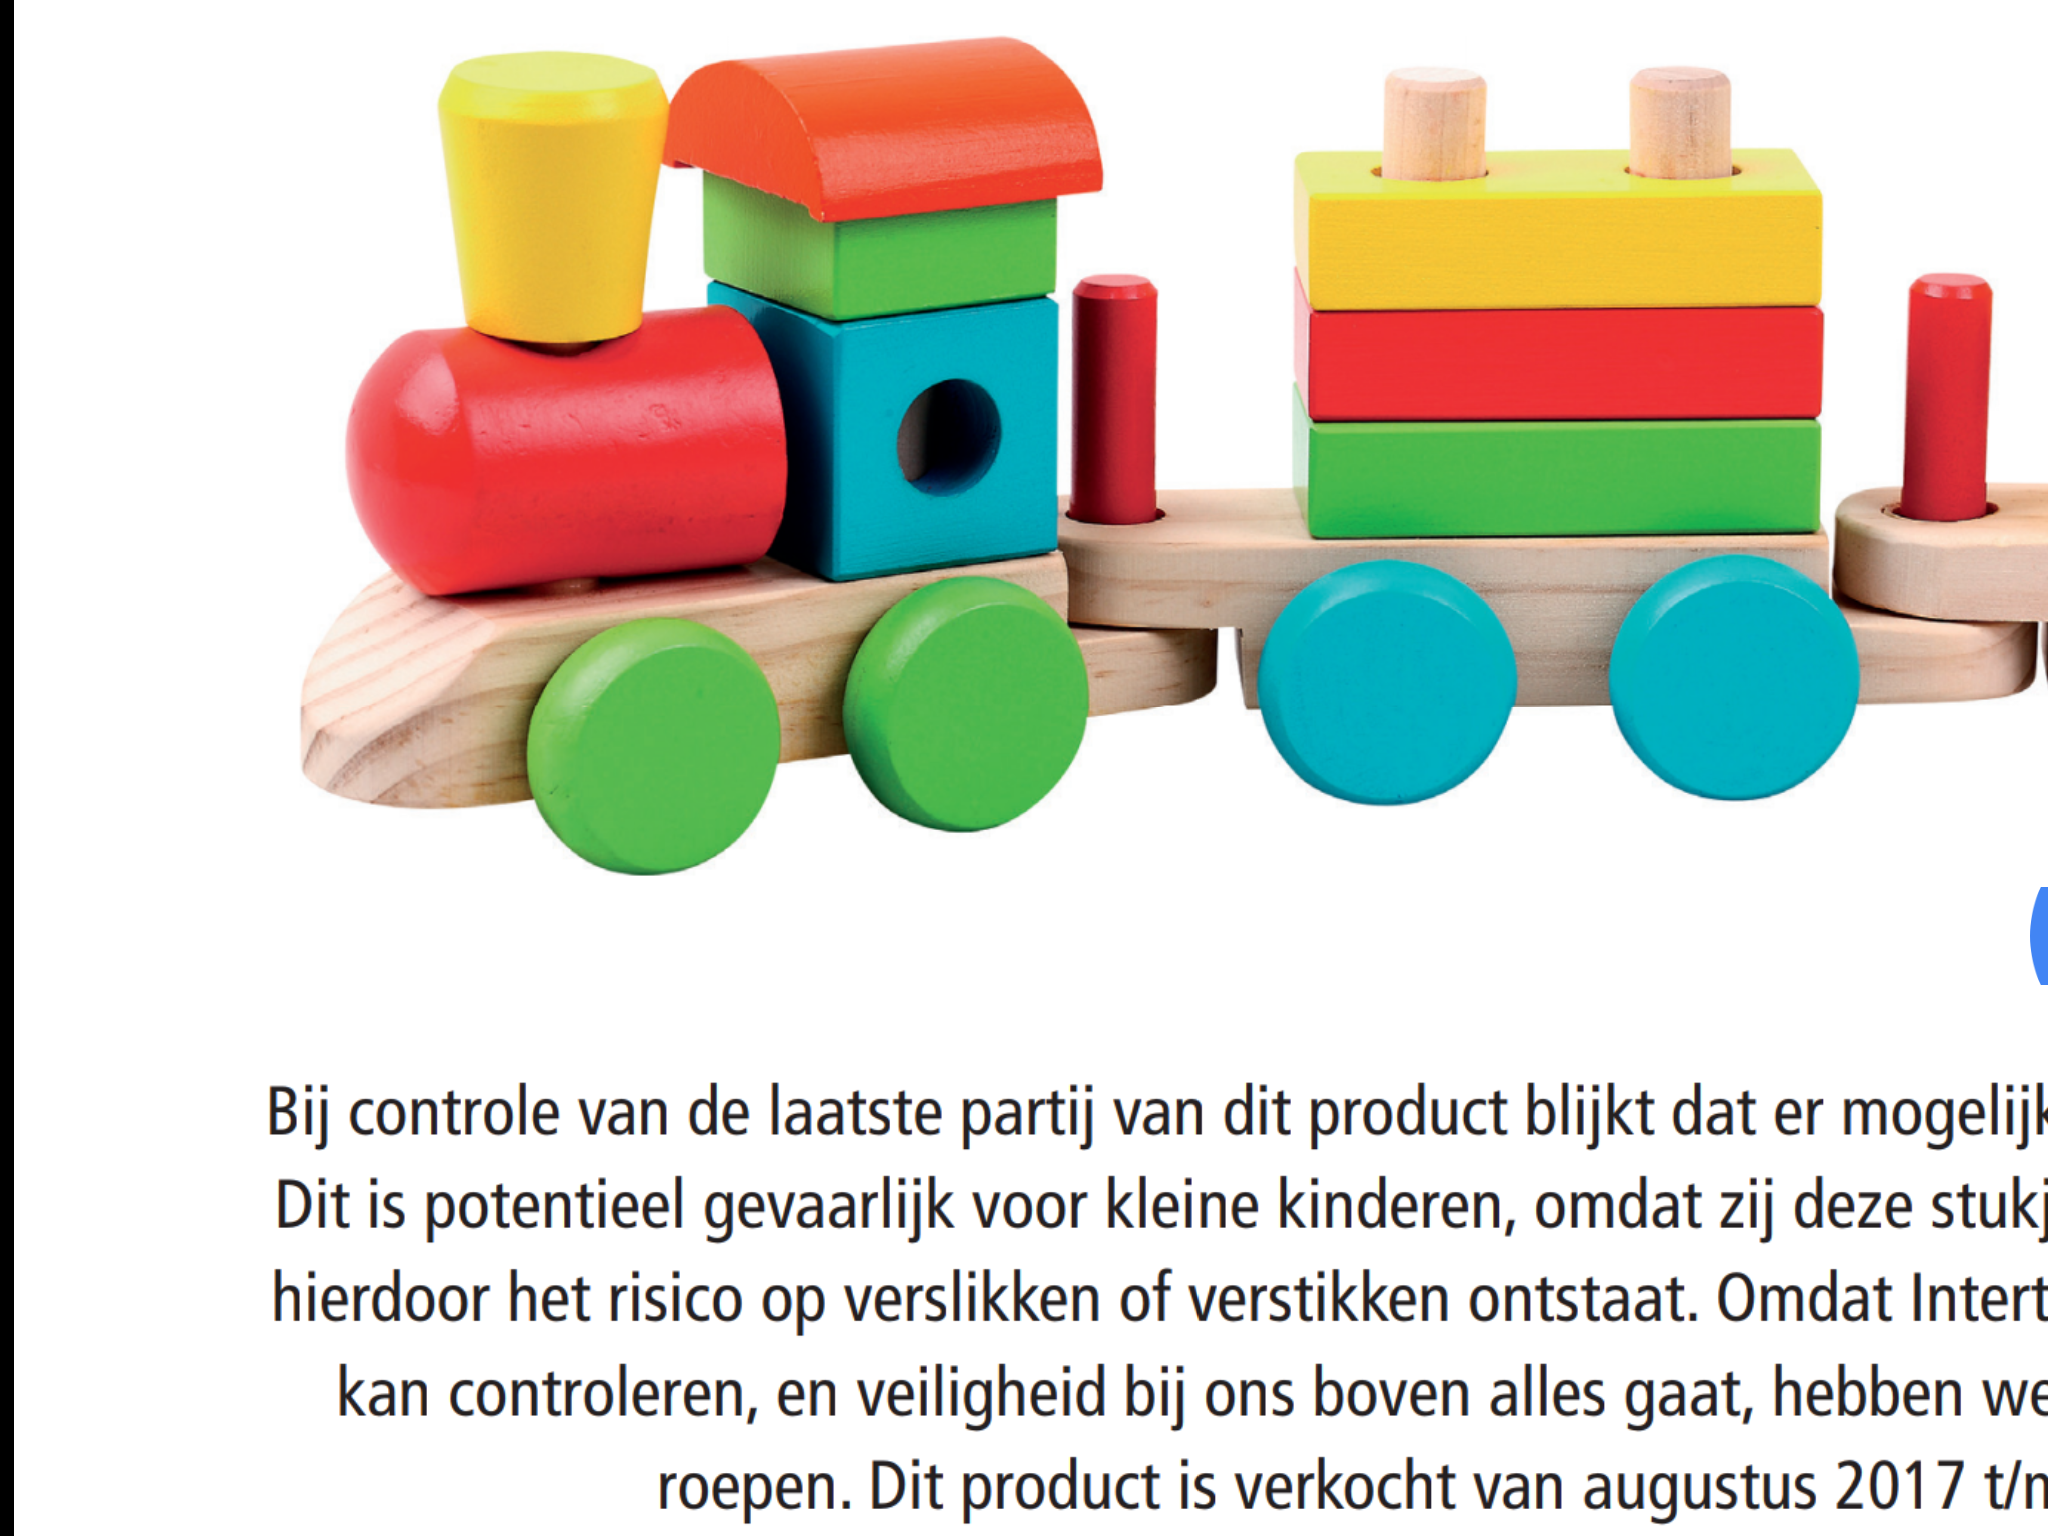 Groot Omleiding Pakket Terughaalactie houten trein Intertoys, Bart Smit en Marskramer